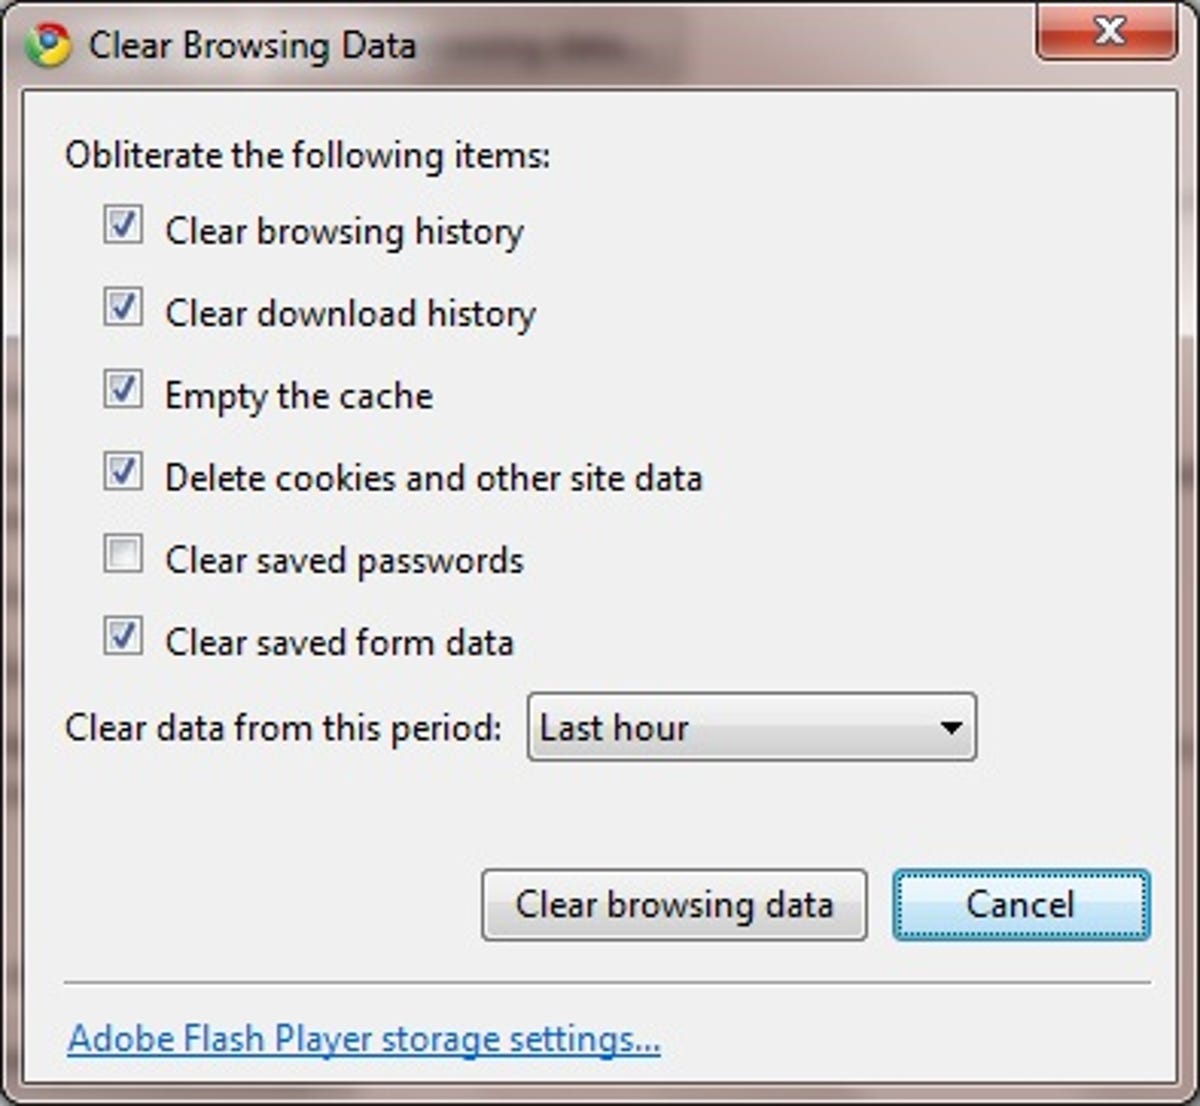 Google Chrome Clear Browsing Data dialog